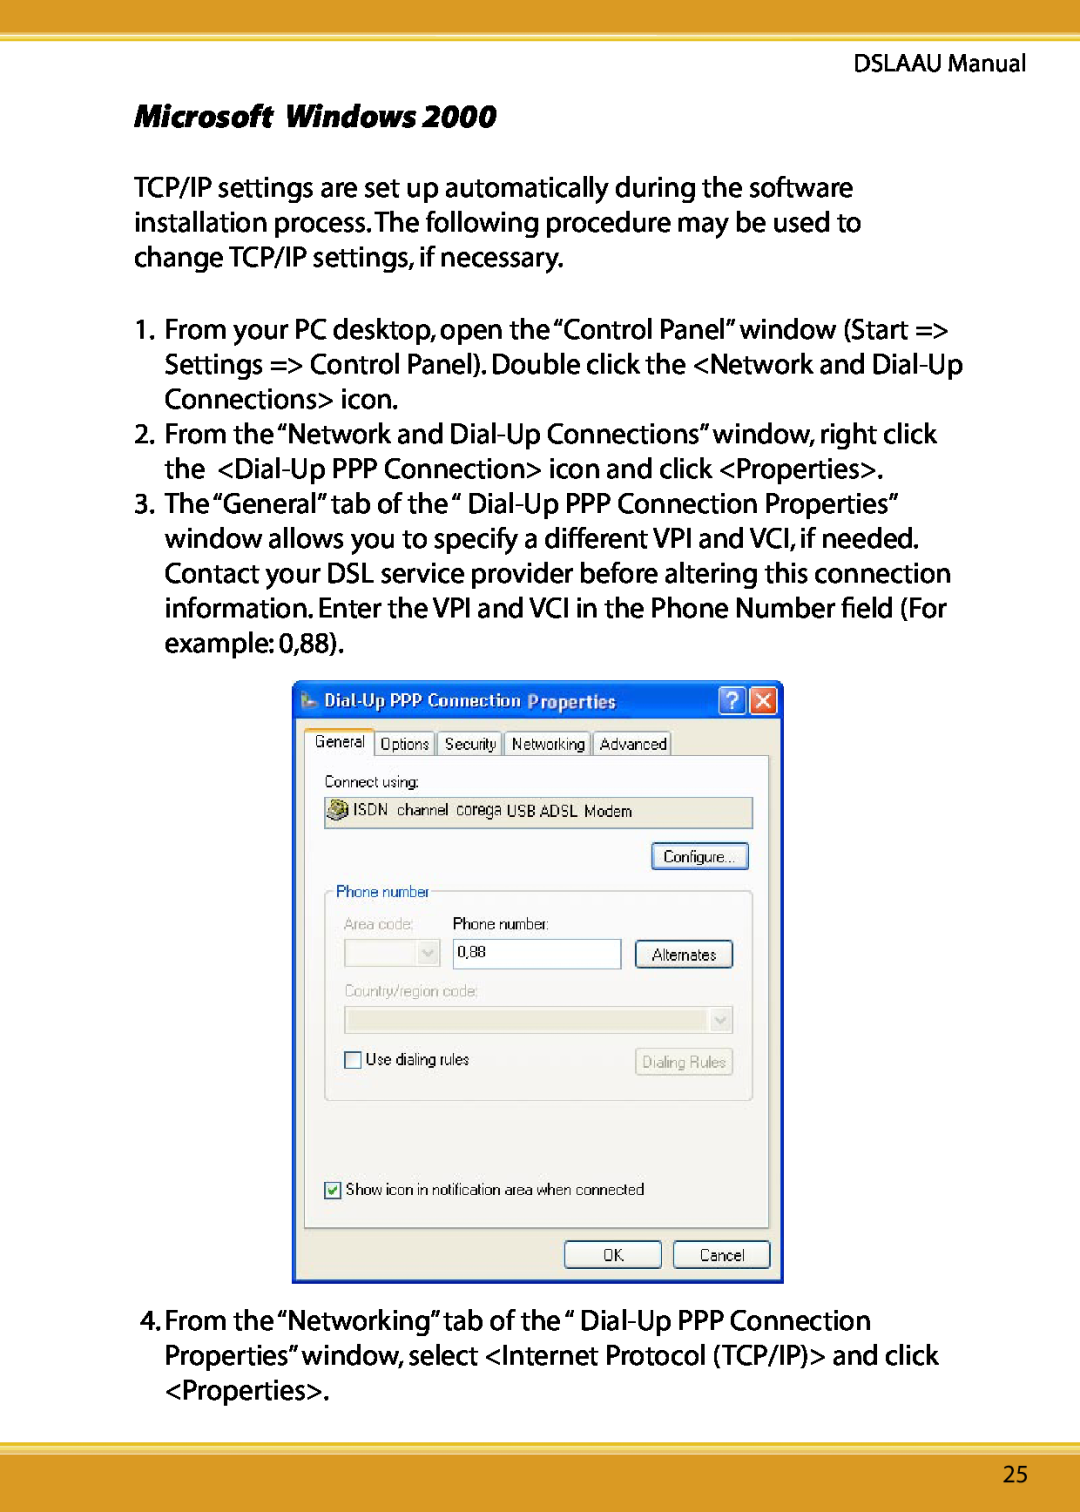 Corega user manual Microsoft Windows, DSLAAU Manual 